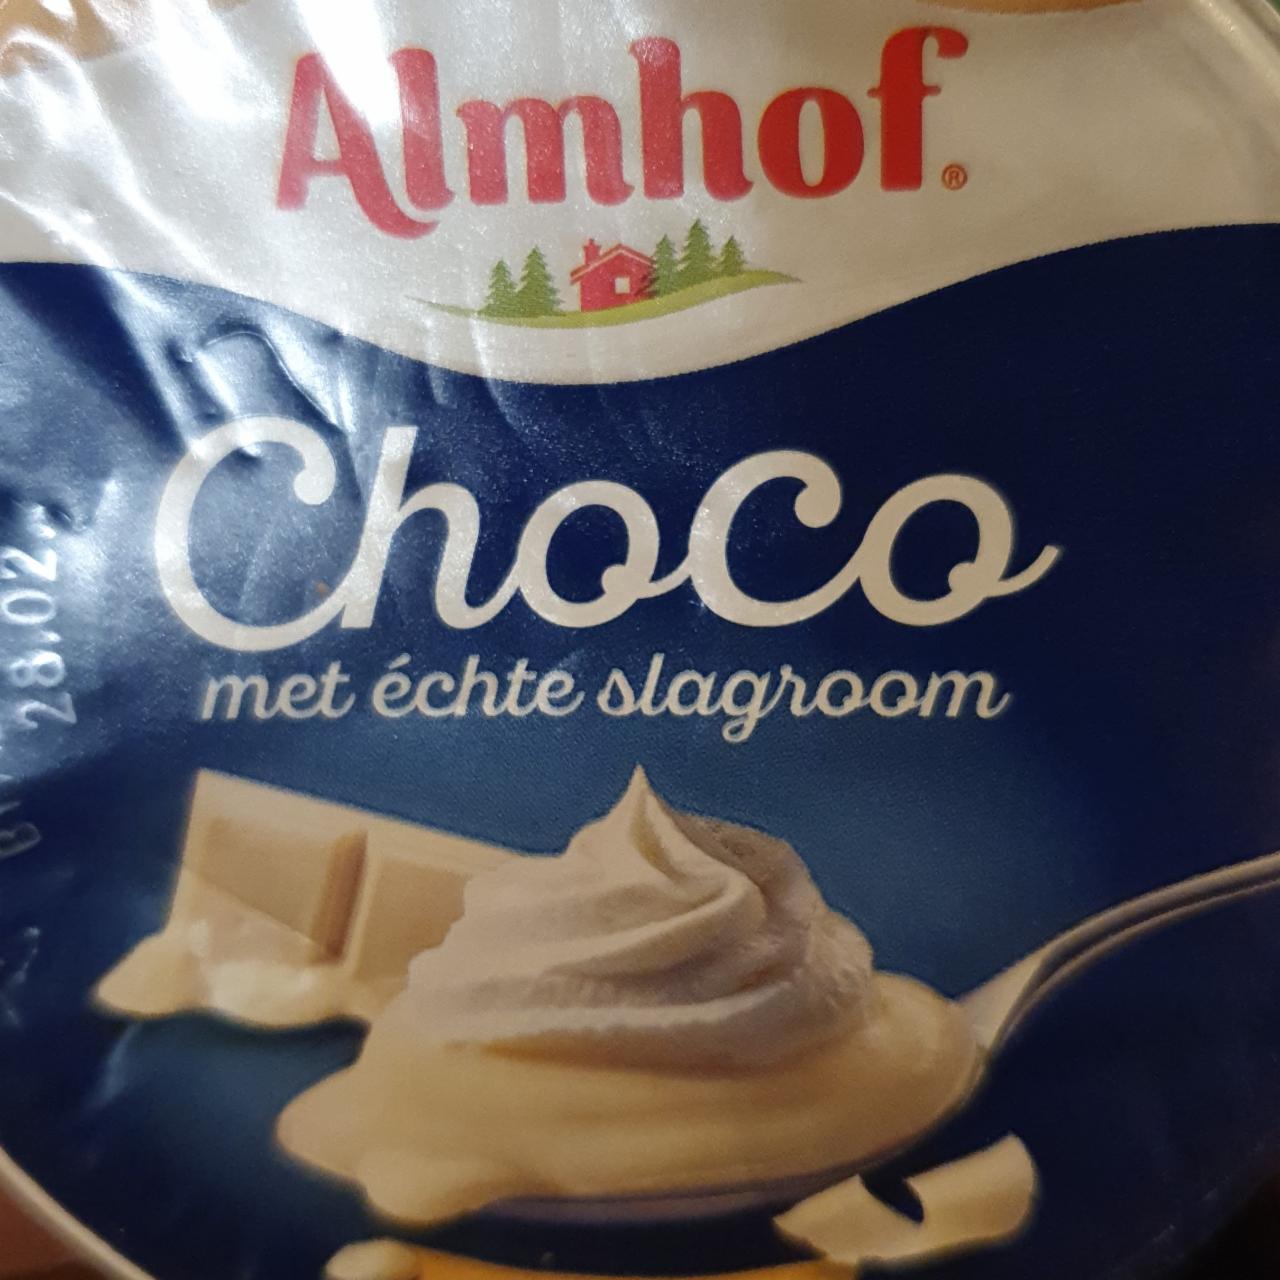 Fotografie - Choco met échte slagroom Almhof